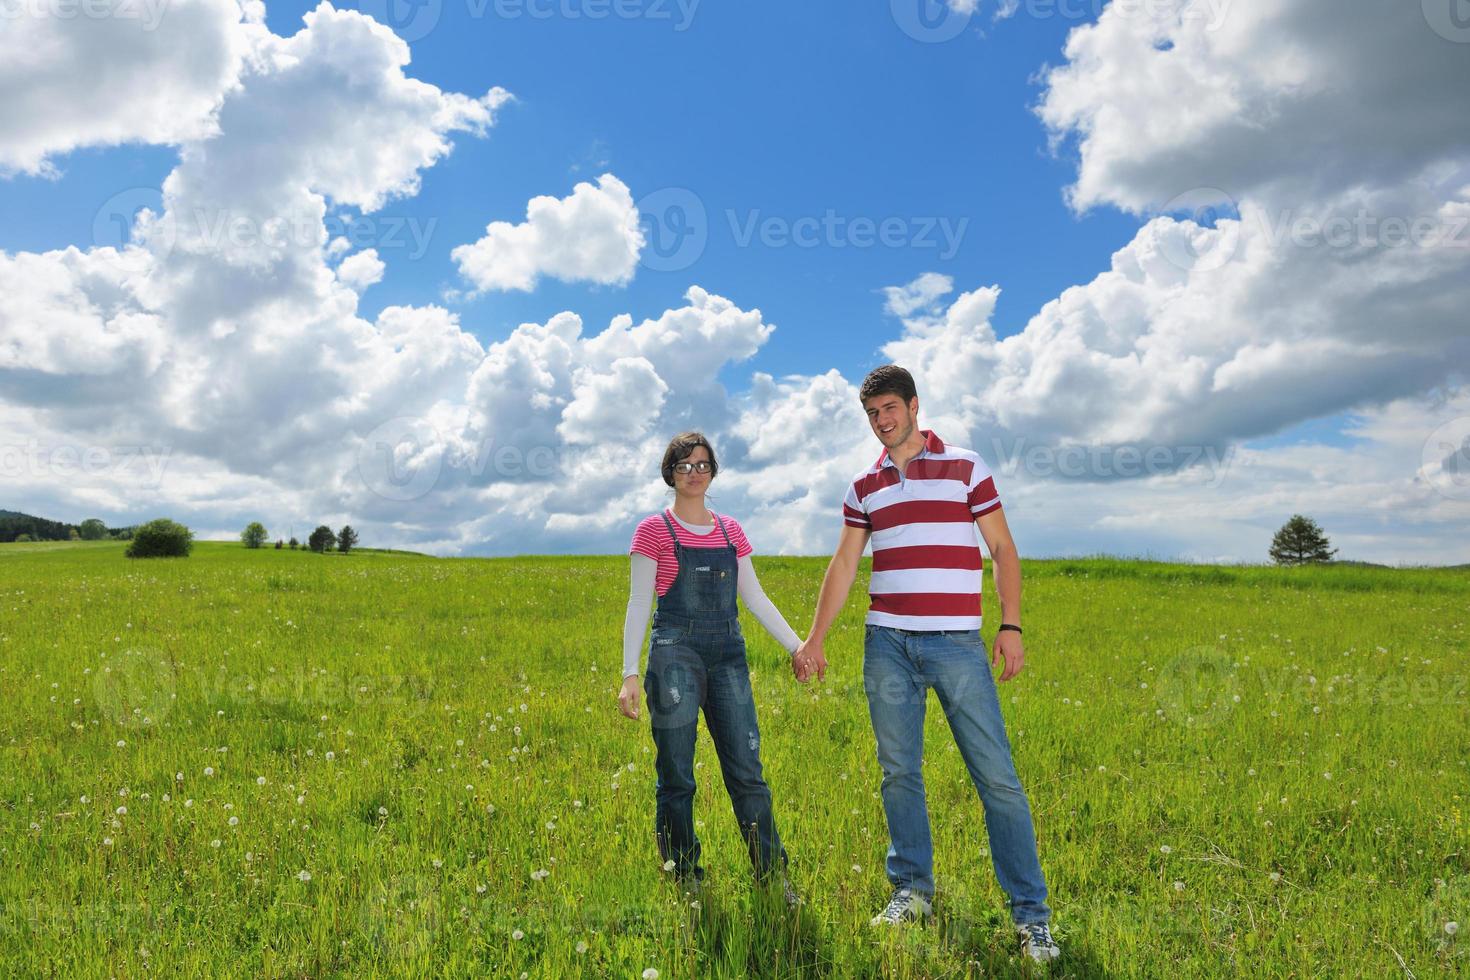 casal jovem romântico apaixonado juntos ao ar livre foto